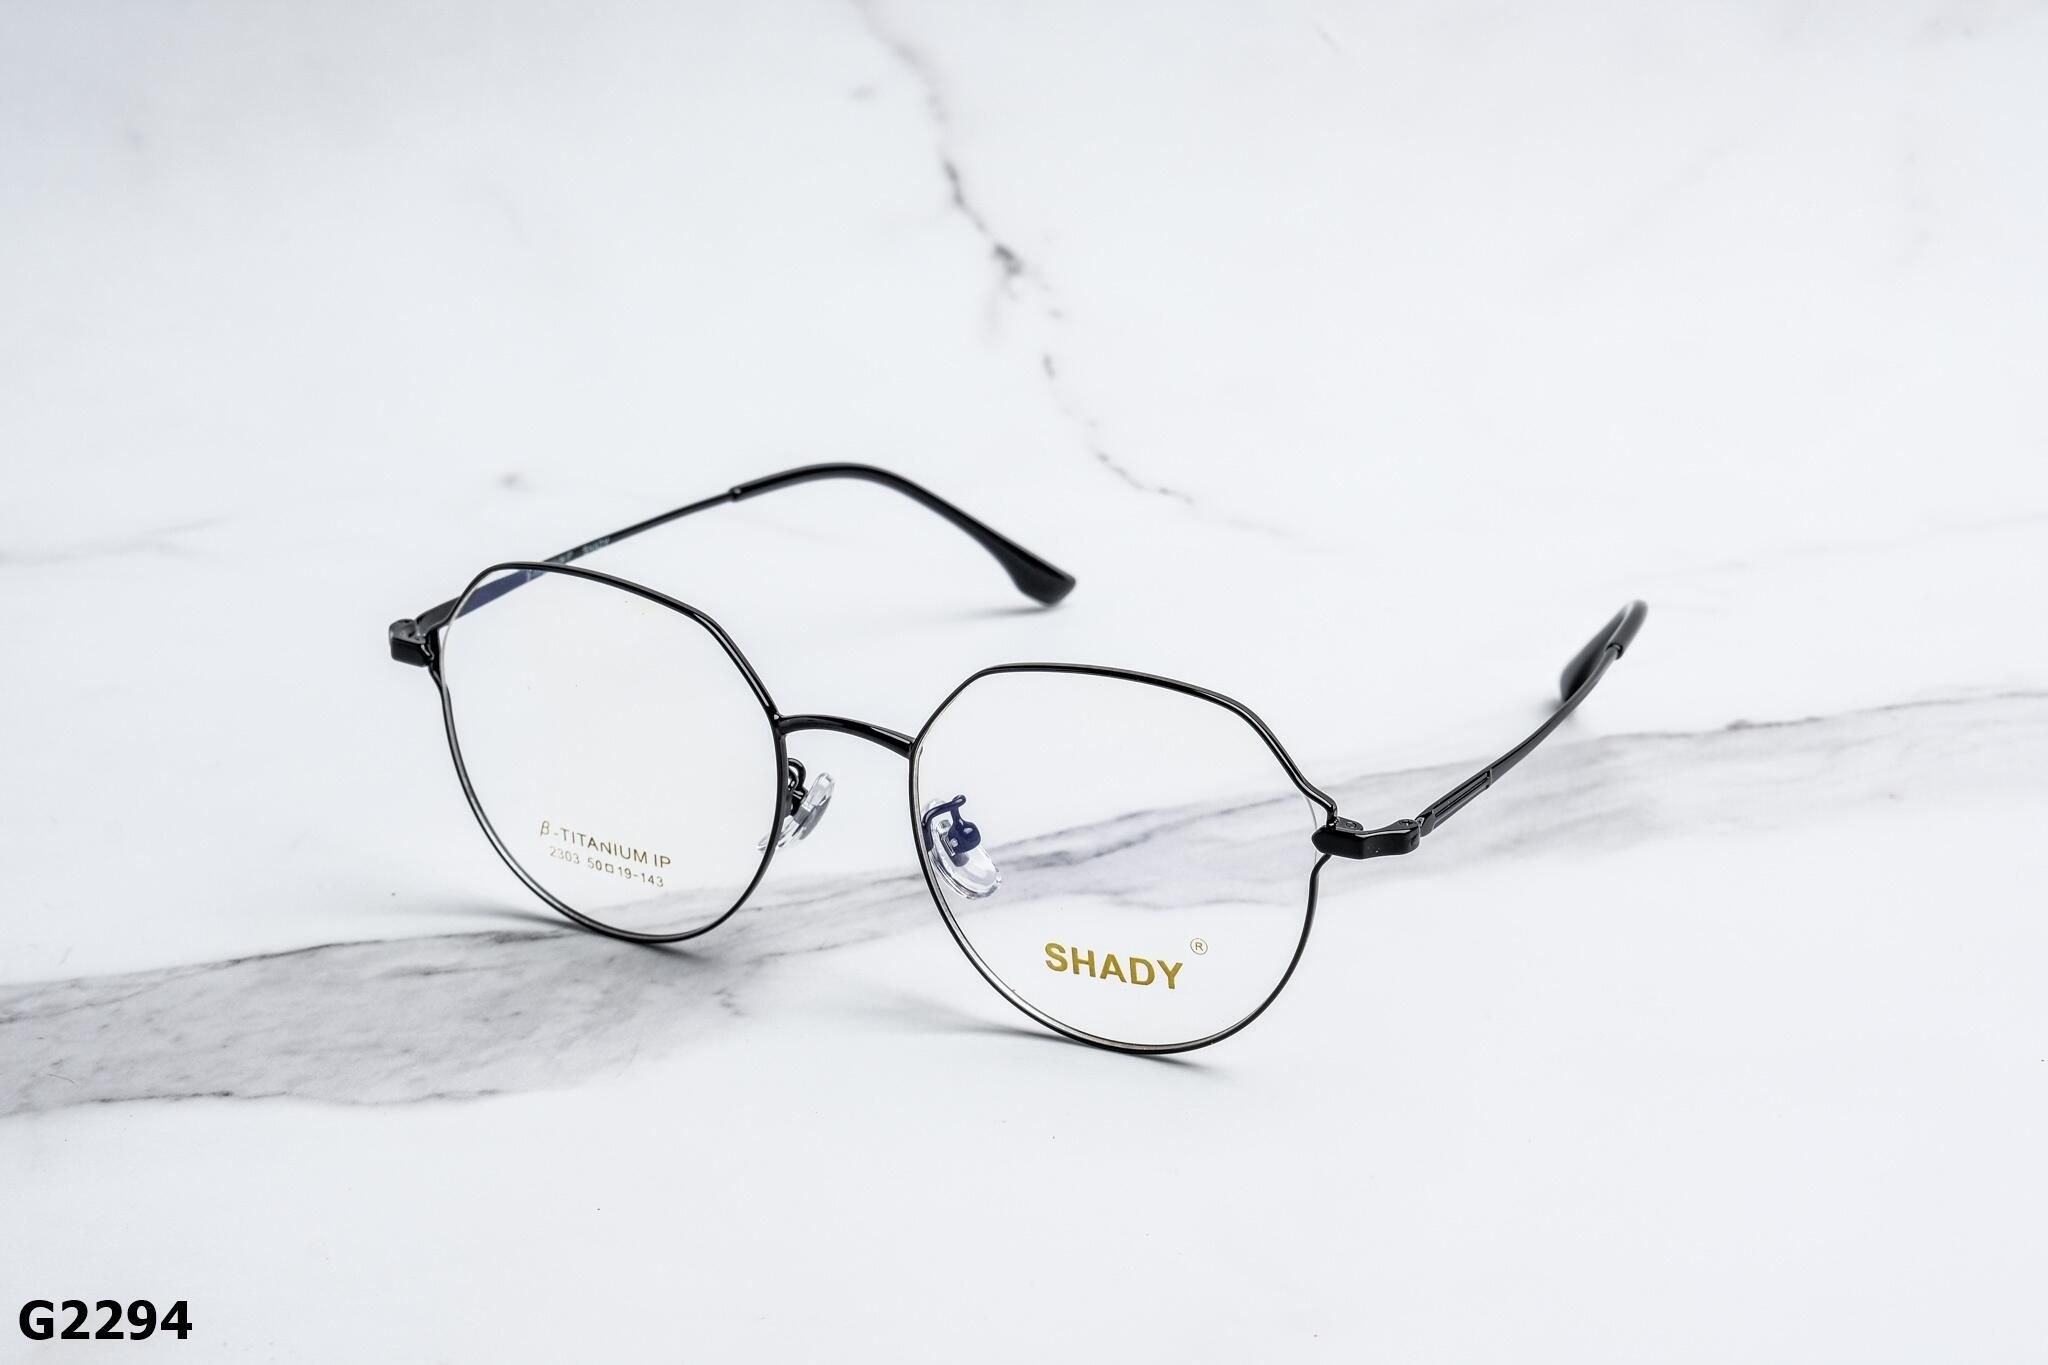  SHADY Eyewear - Glasses - G2294 